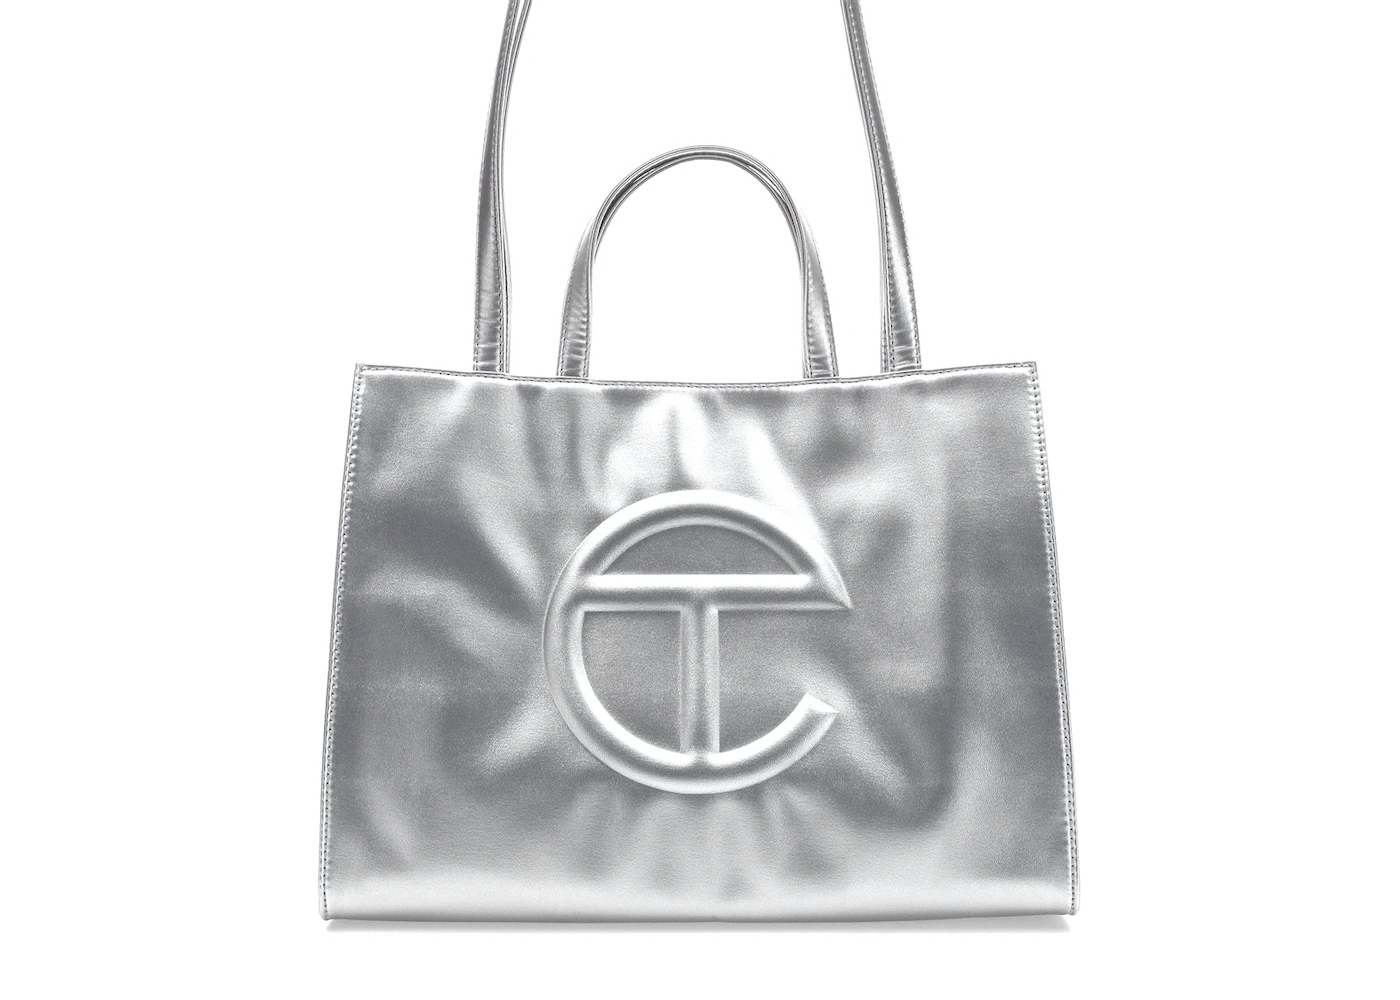 Telfar Shopping Bag
Medium Silver